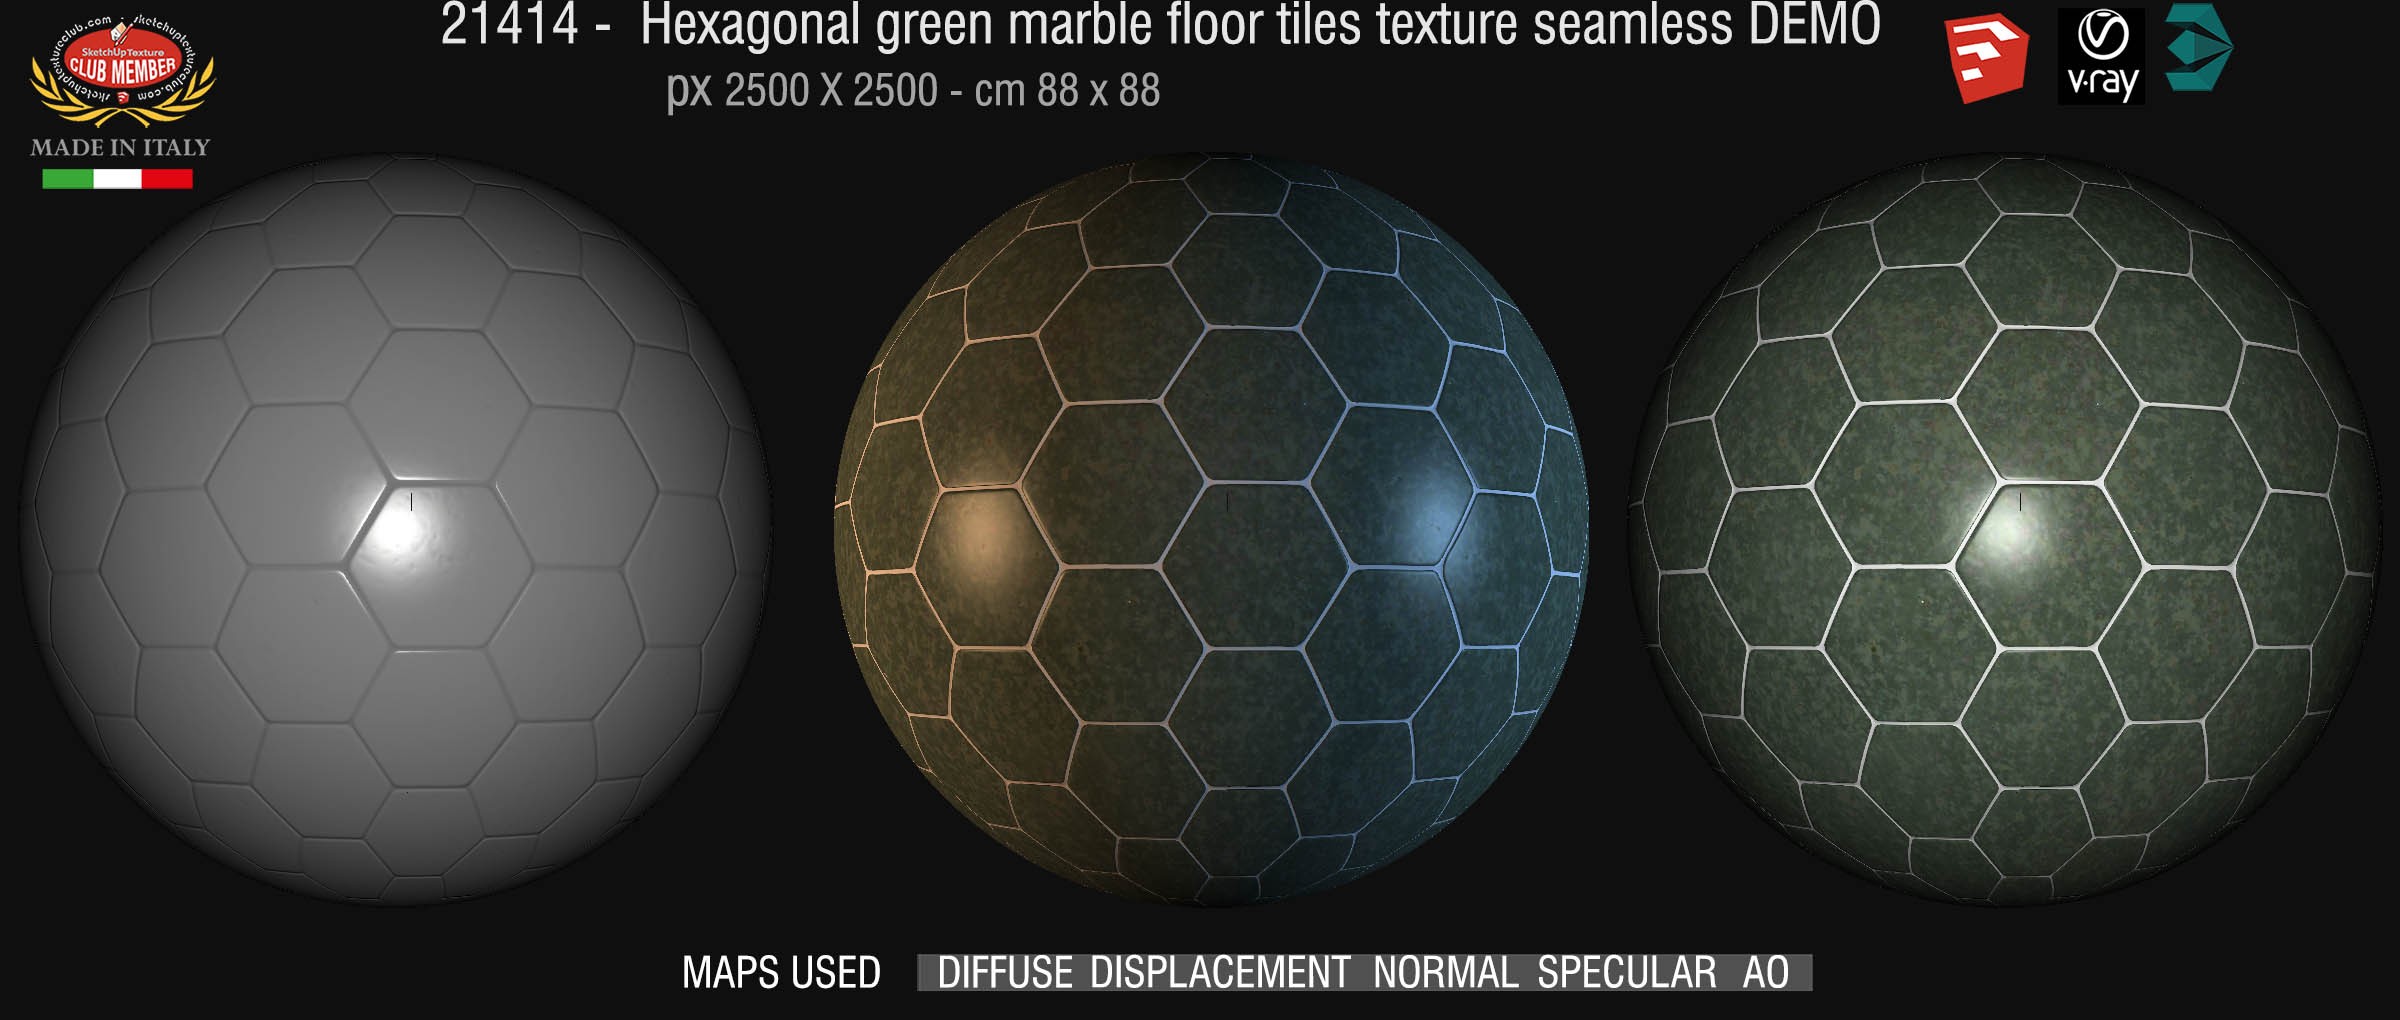 21414 hexagonal green marble tile texture seamless + maps DEMO